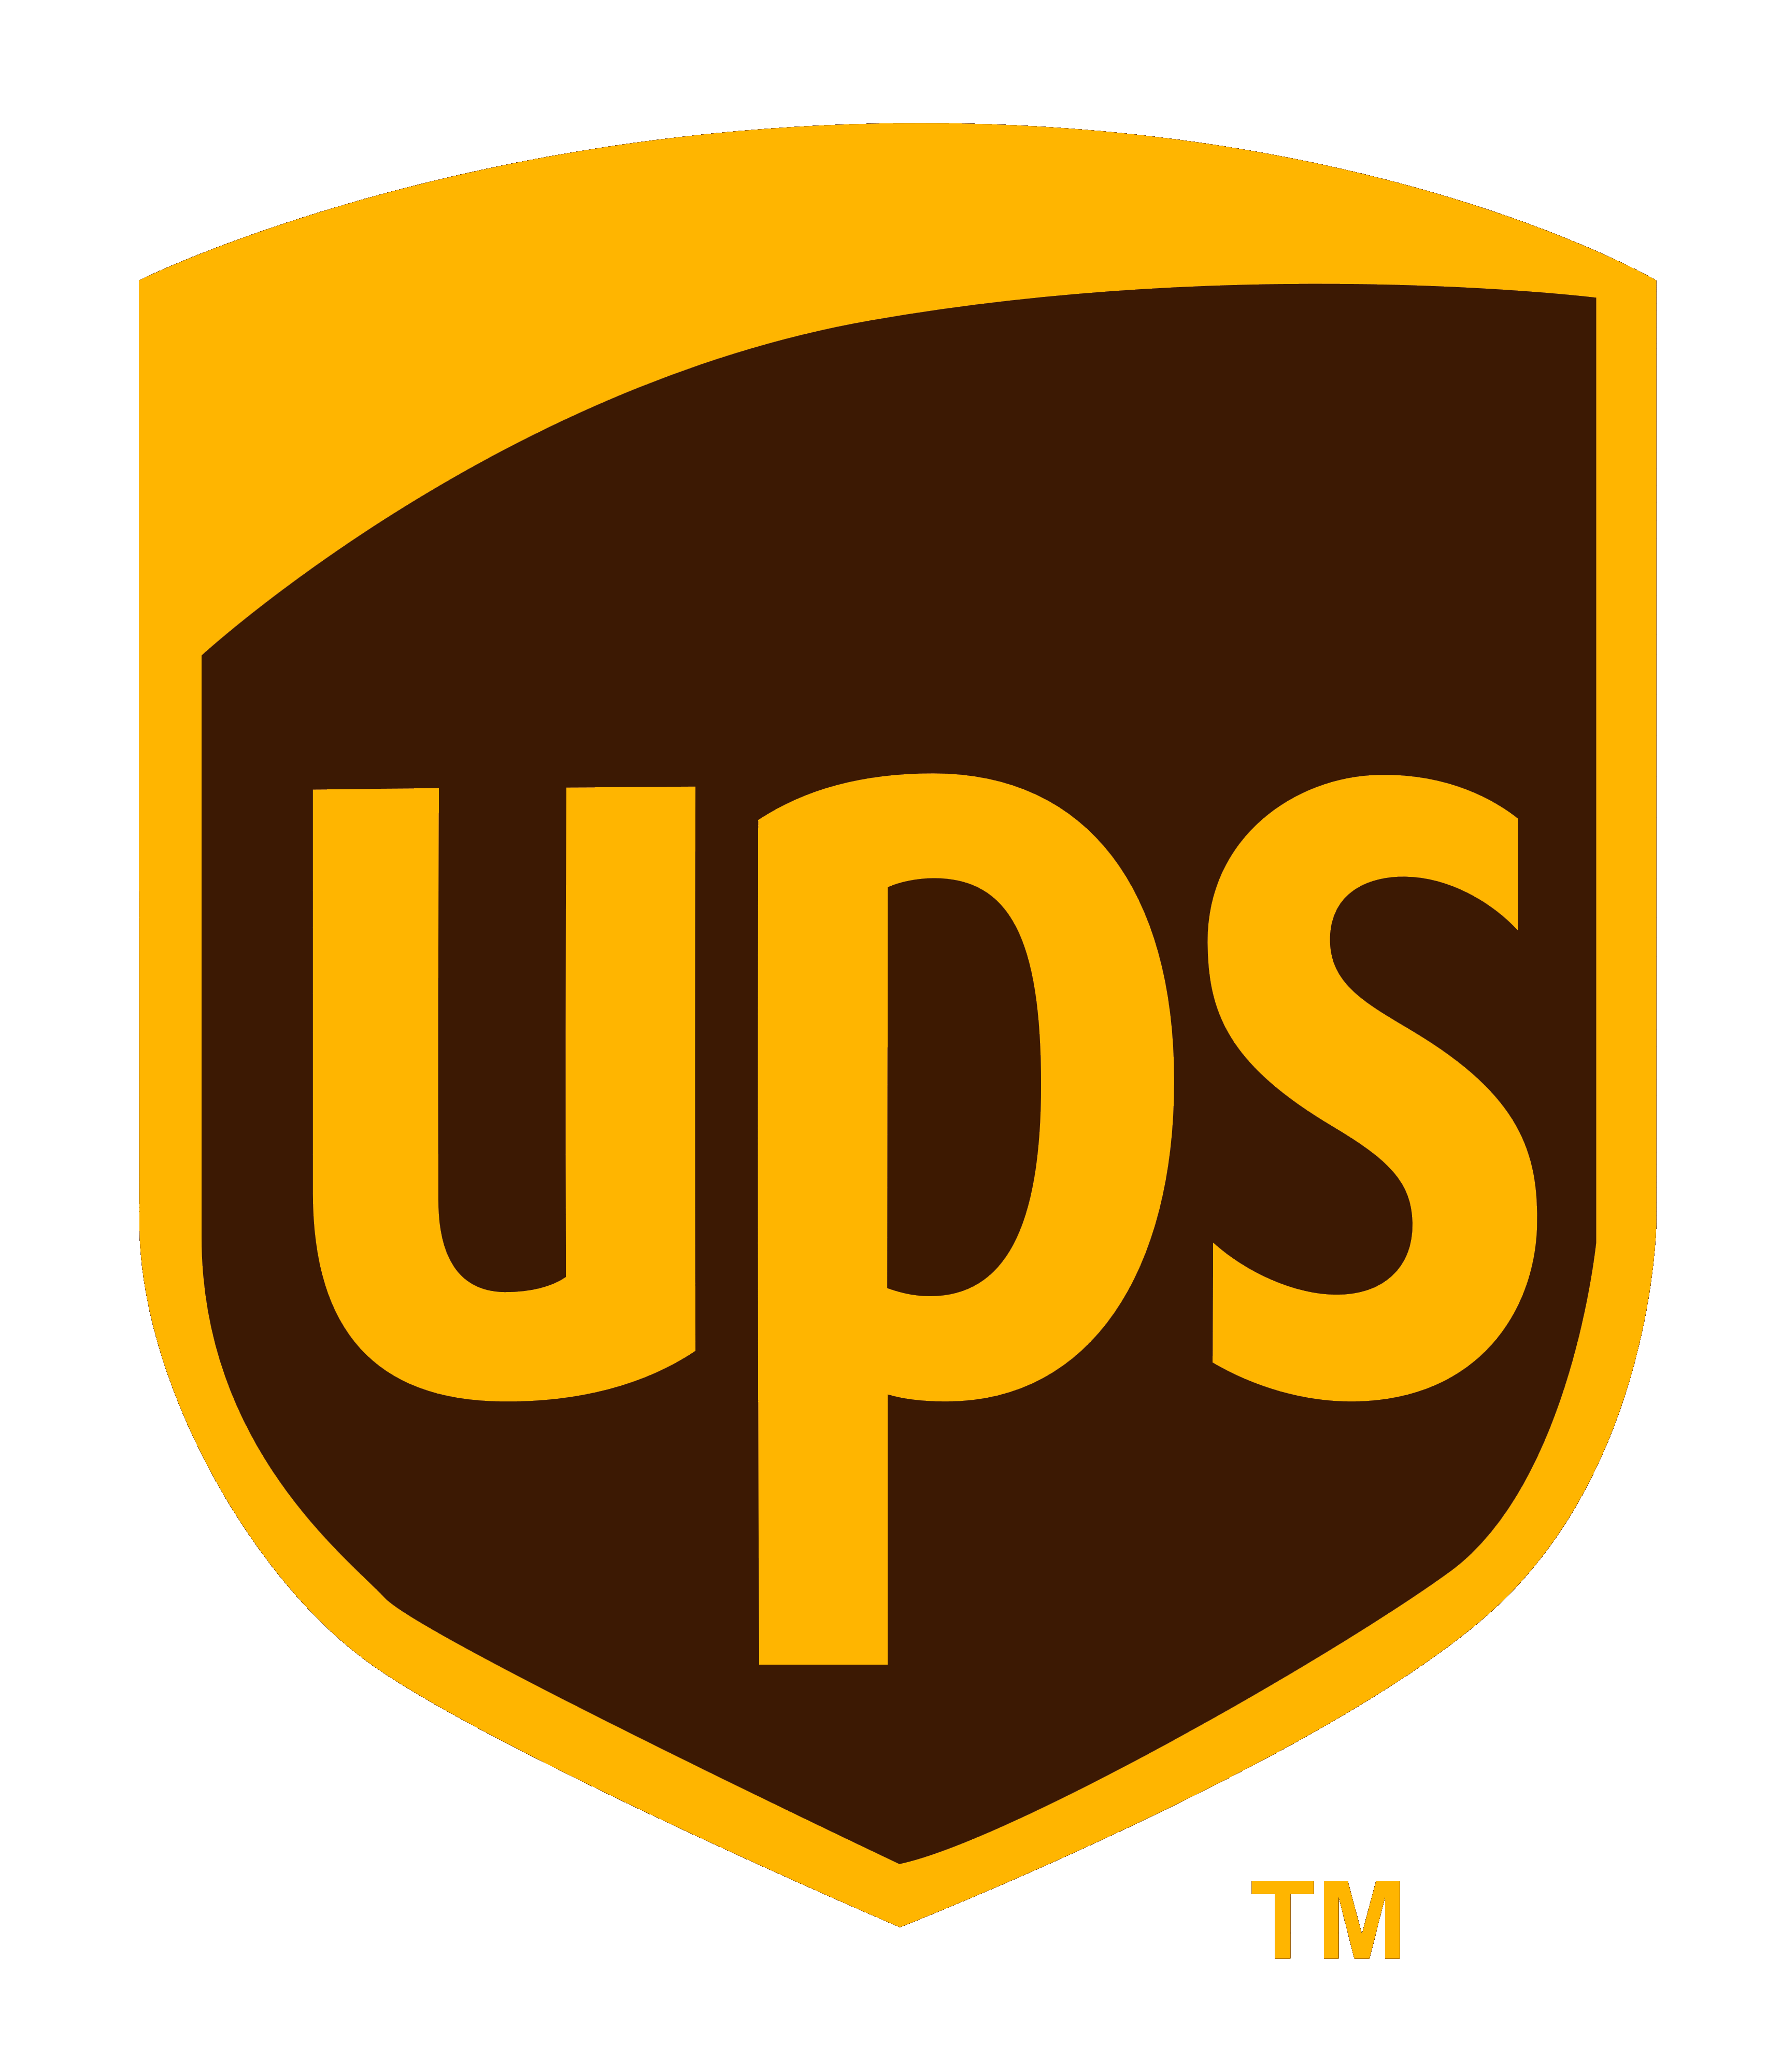 UPS kargonun eski logosu 2003